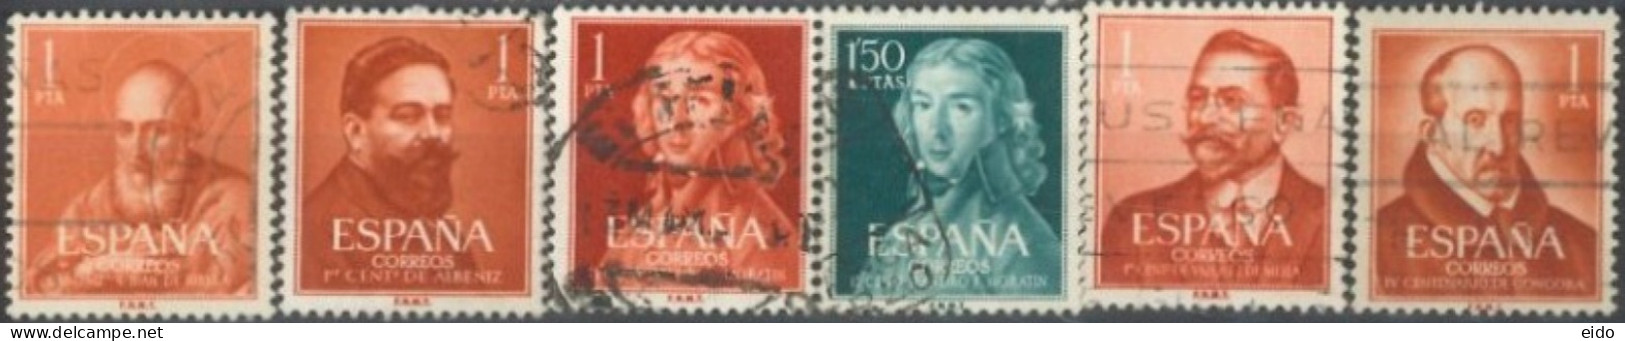 SPAIN, 1960/61, SAINTS & CELEBRITIES STAMPS SET OF 6, USED. - Usados